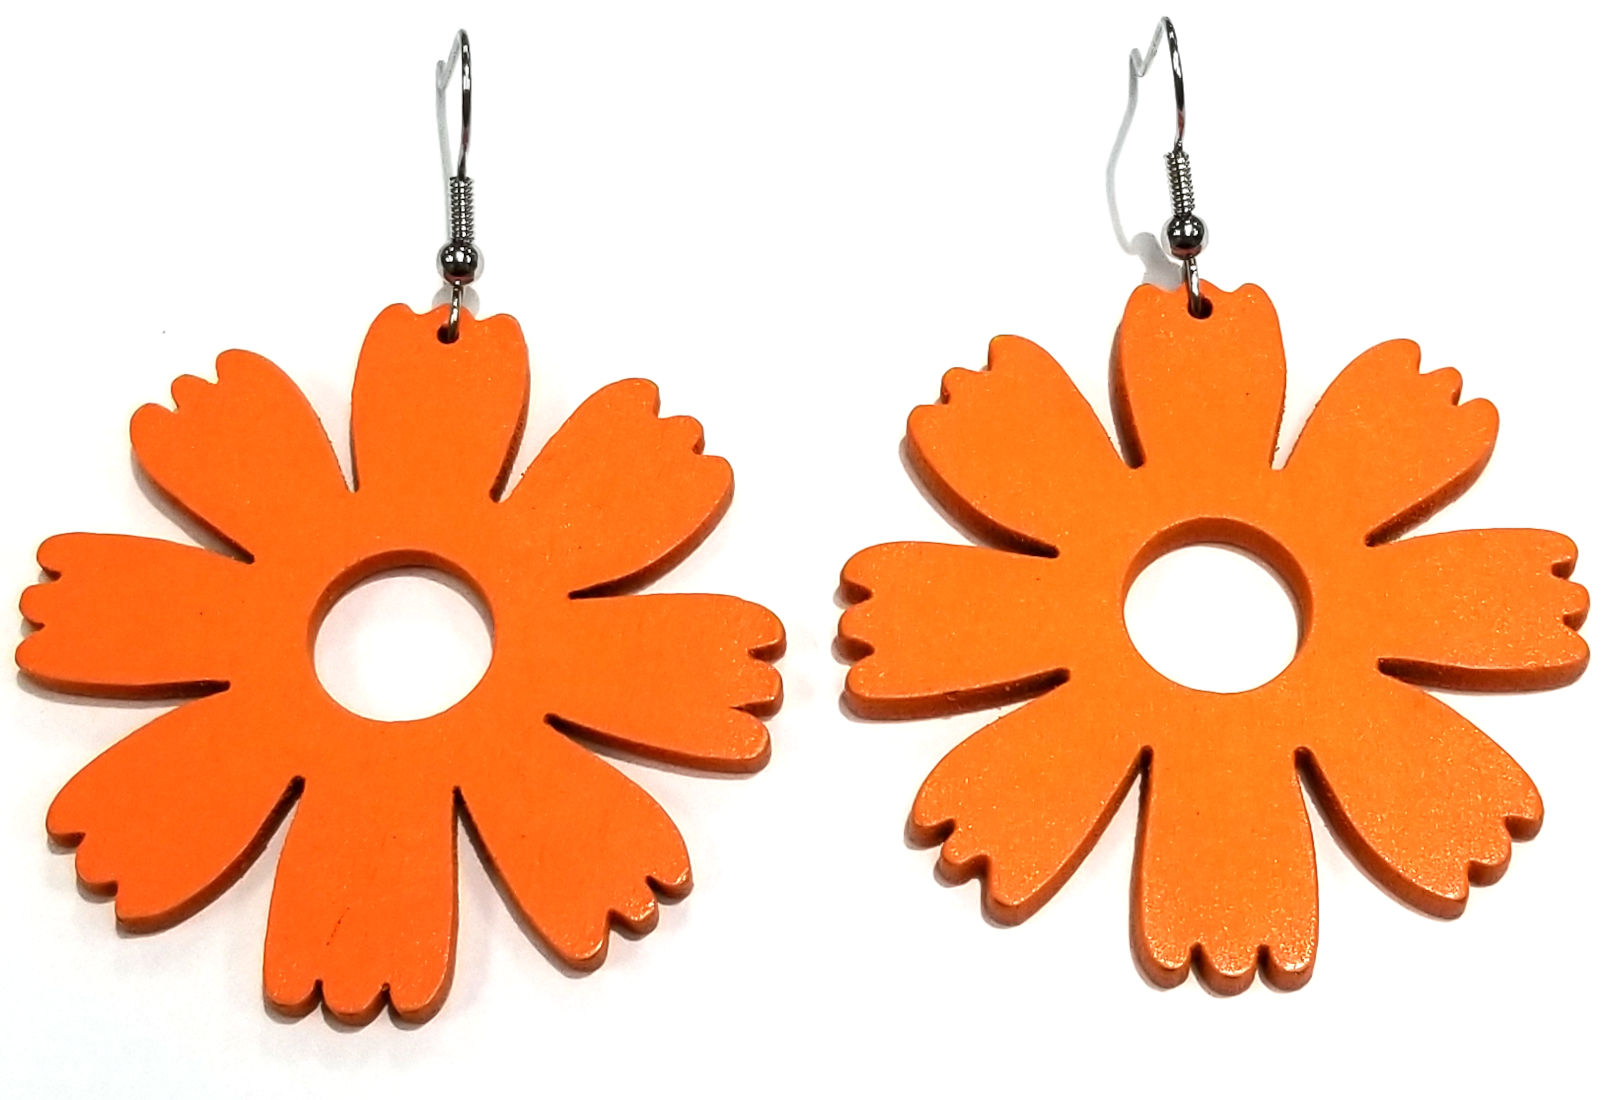 Large orange flower wooden earrings with stainless steel earwires